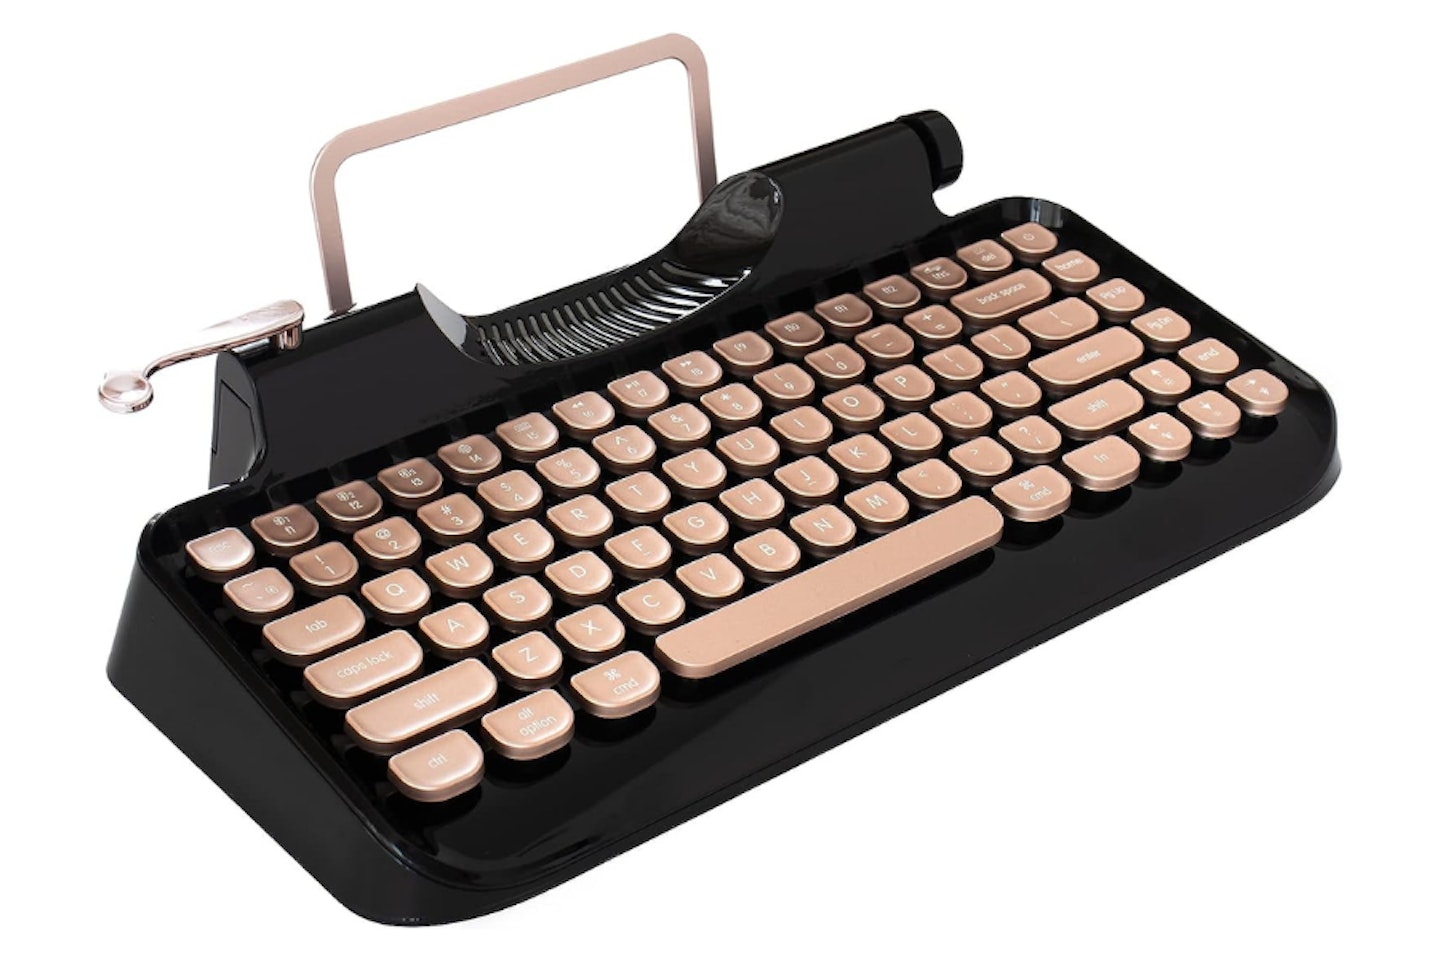 Rymek Typewriter Style Mechanical Wired and Wireless Keyboard - one of the best wireless keyboards